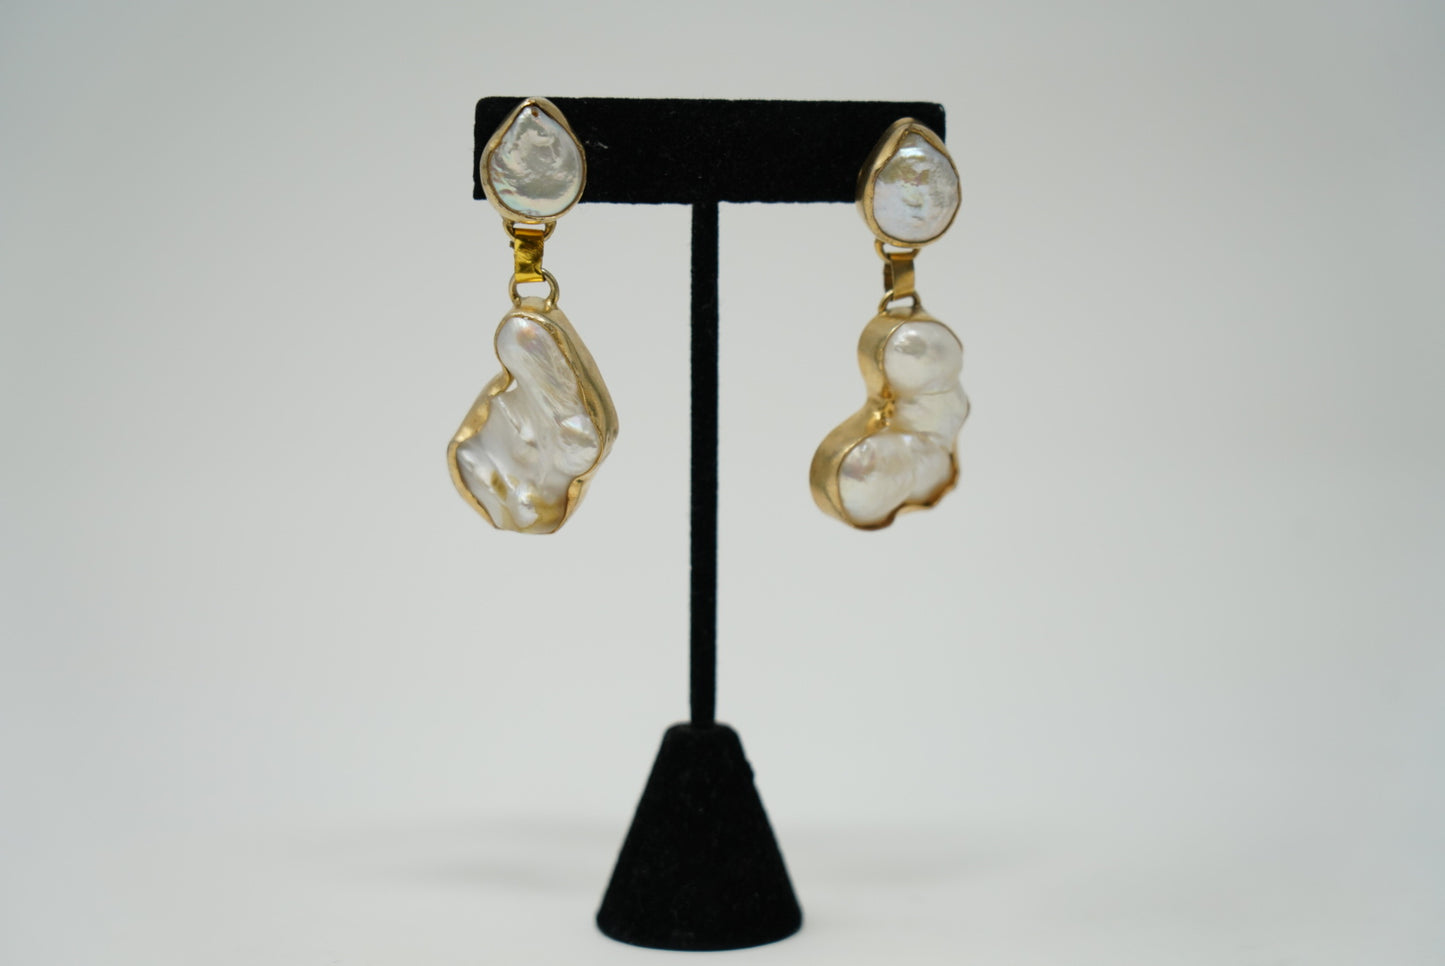 Elegant Pearl Earrings For Women